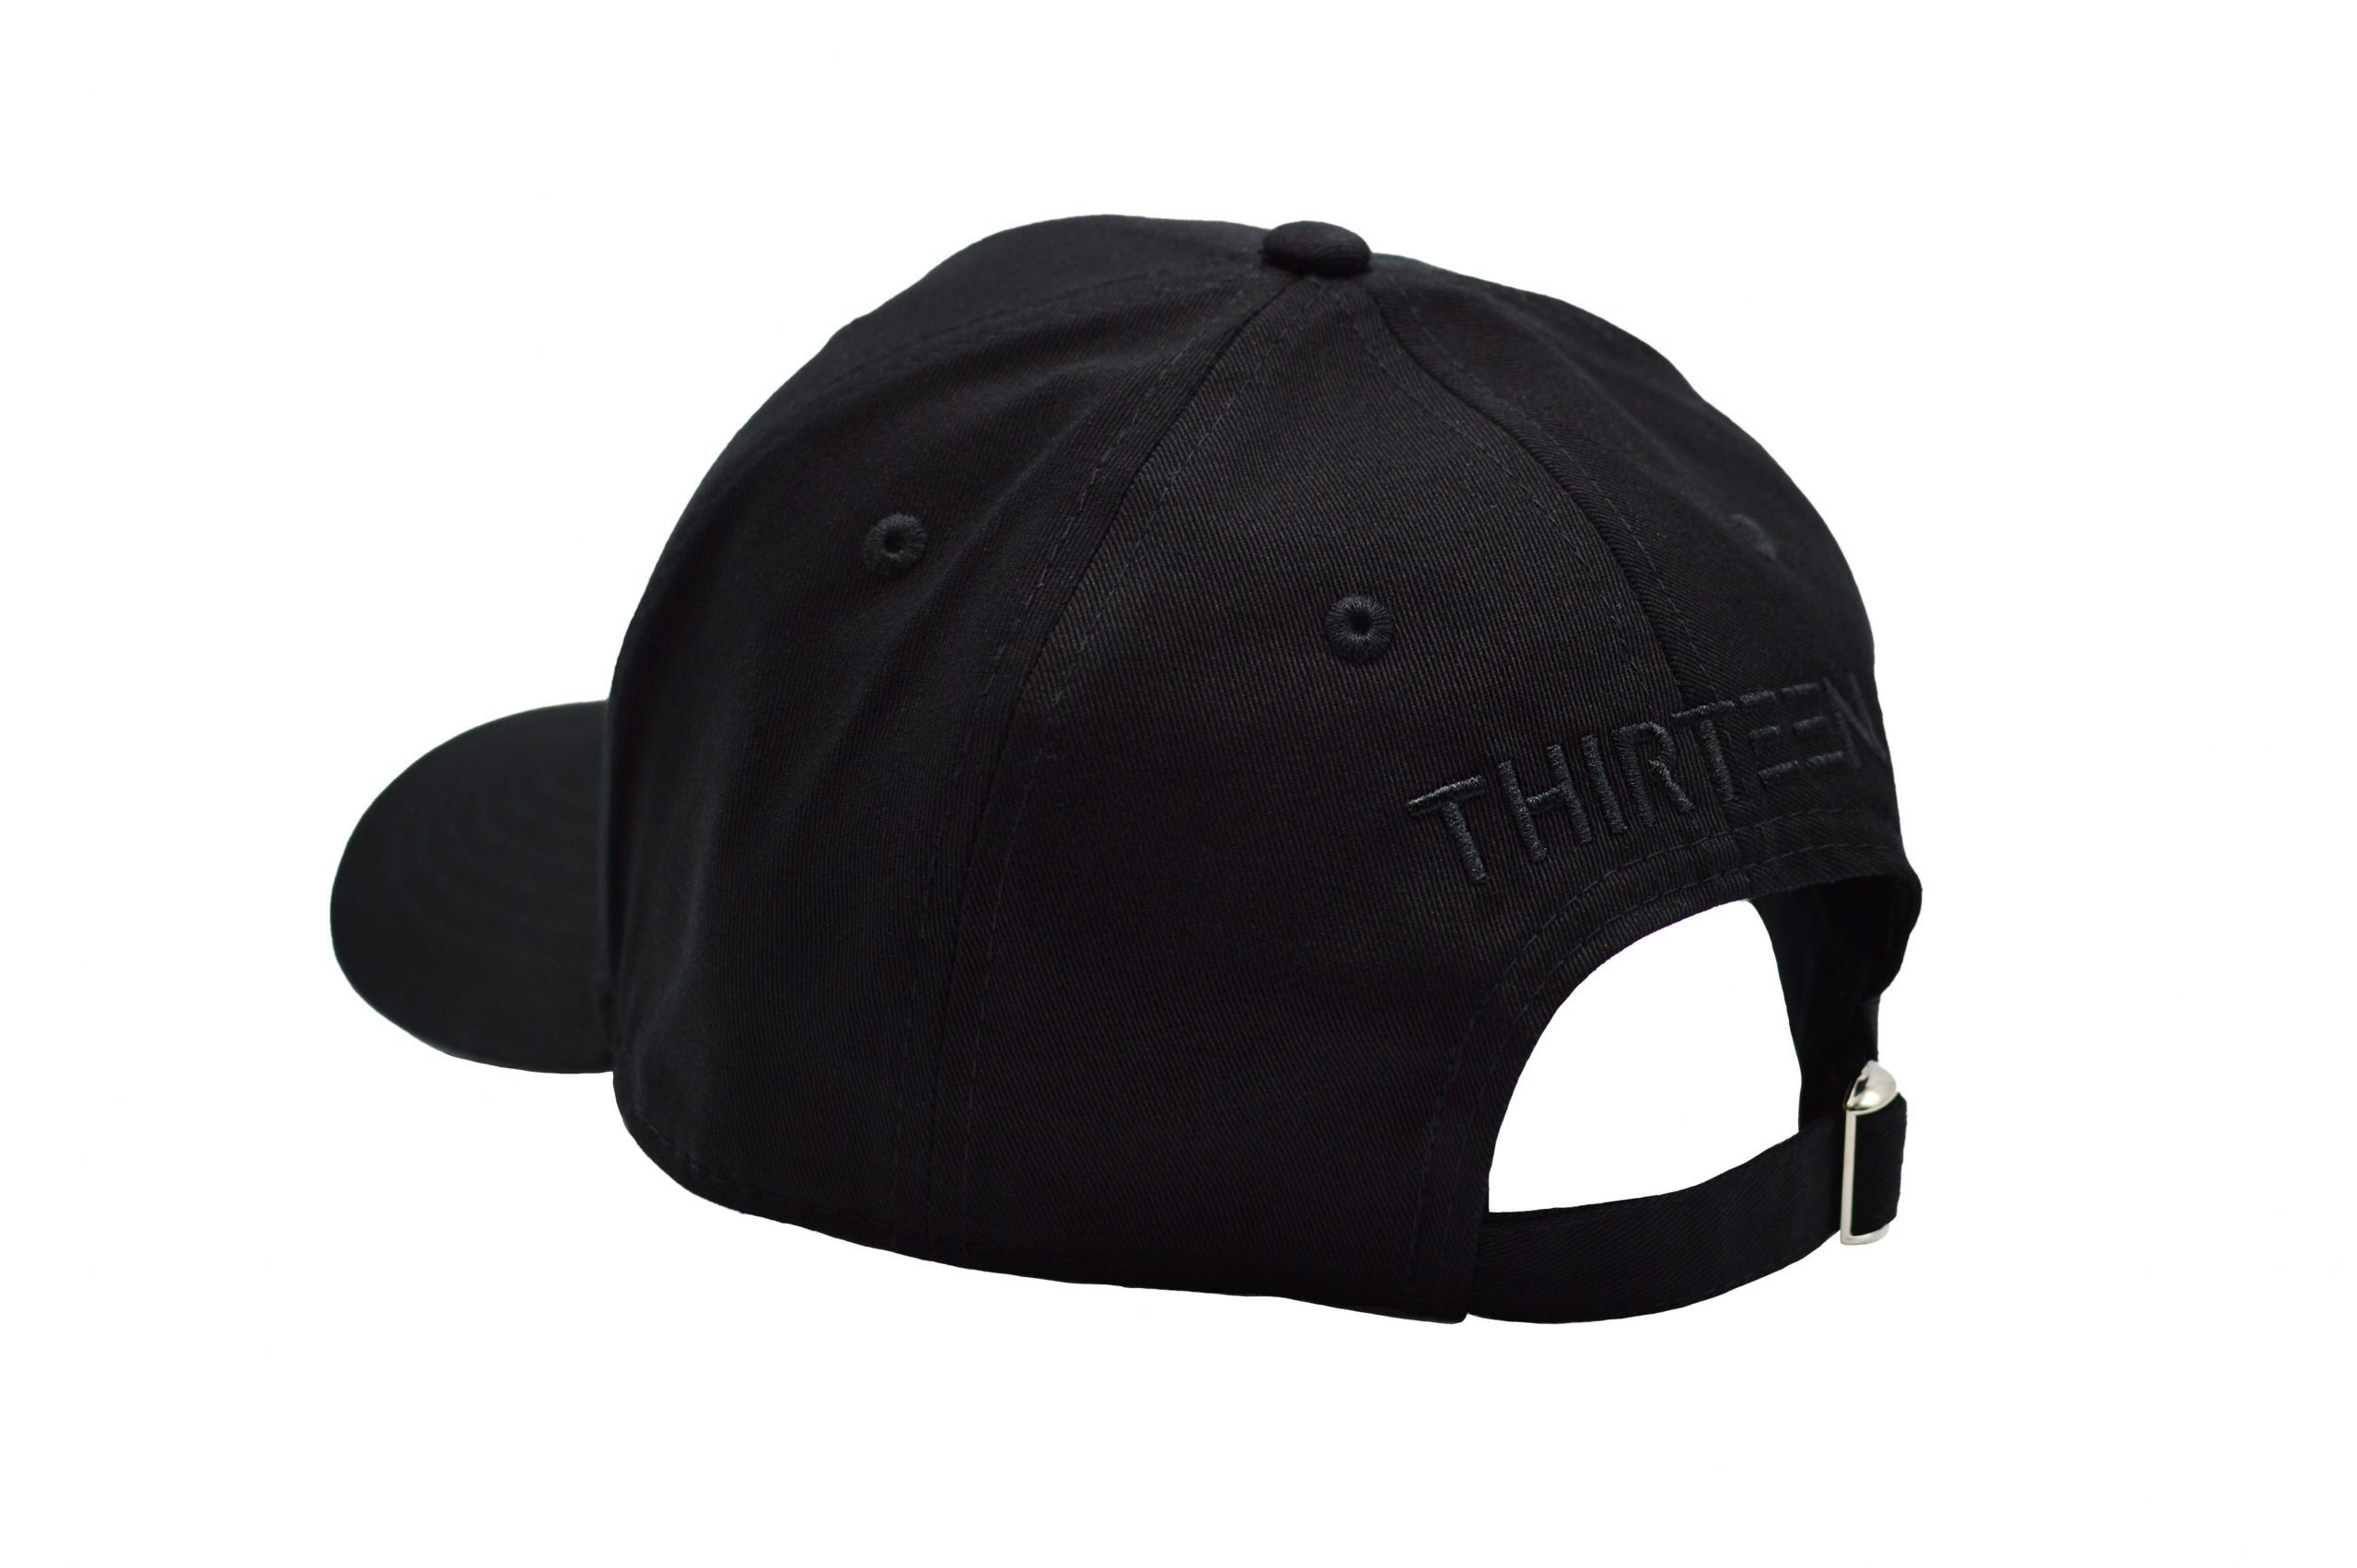 all Baseball CAP "EMPIRE" EMPIRE-THIRTEEN black Cap